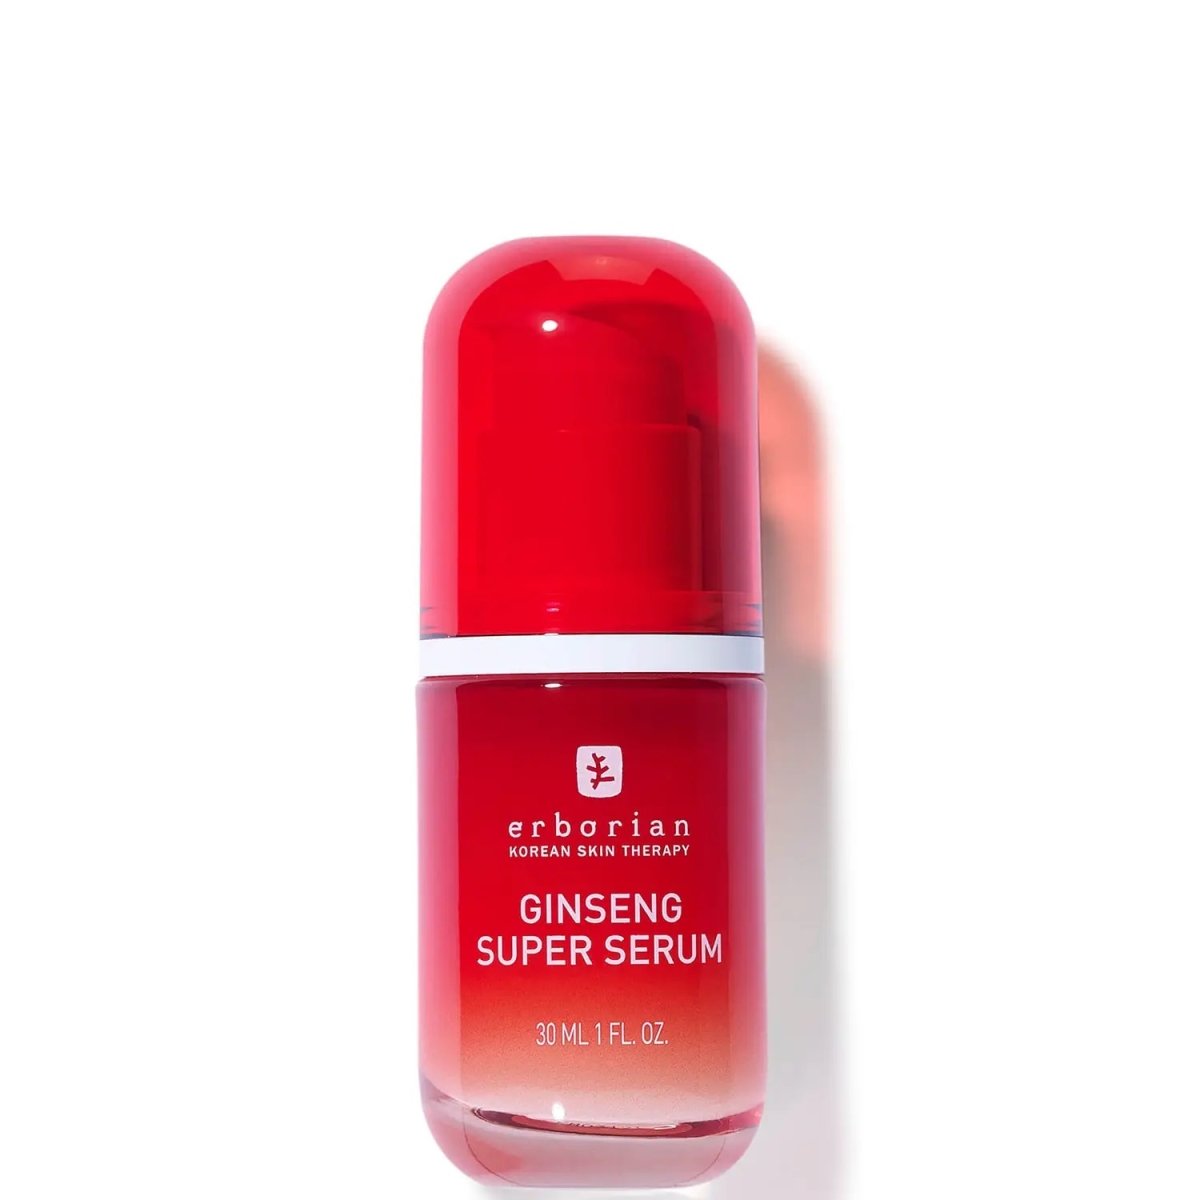 GINSENG SUPER SERUM - Infinity Concept Store